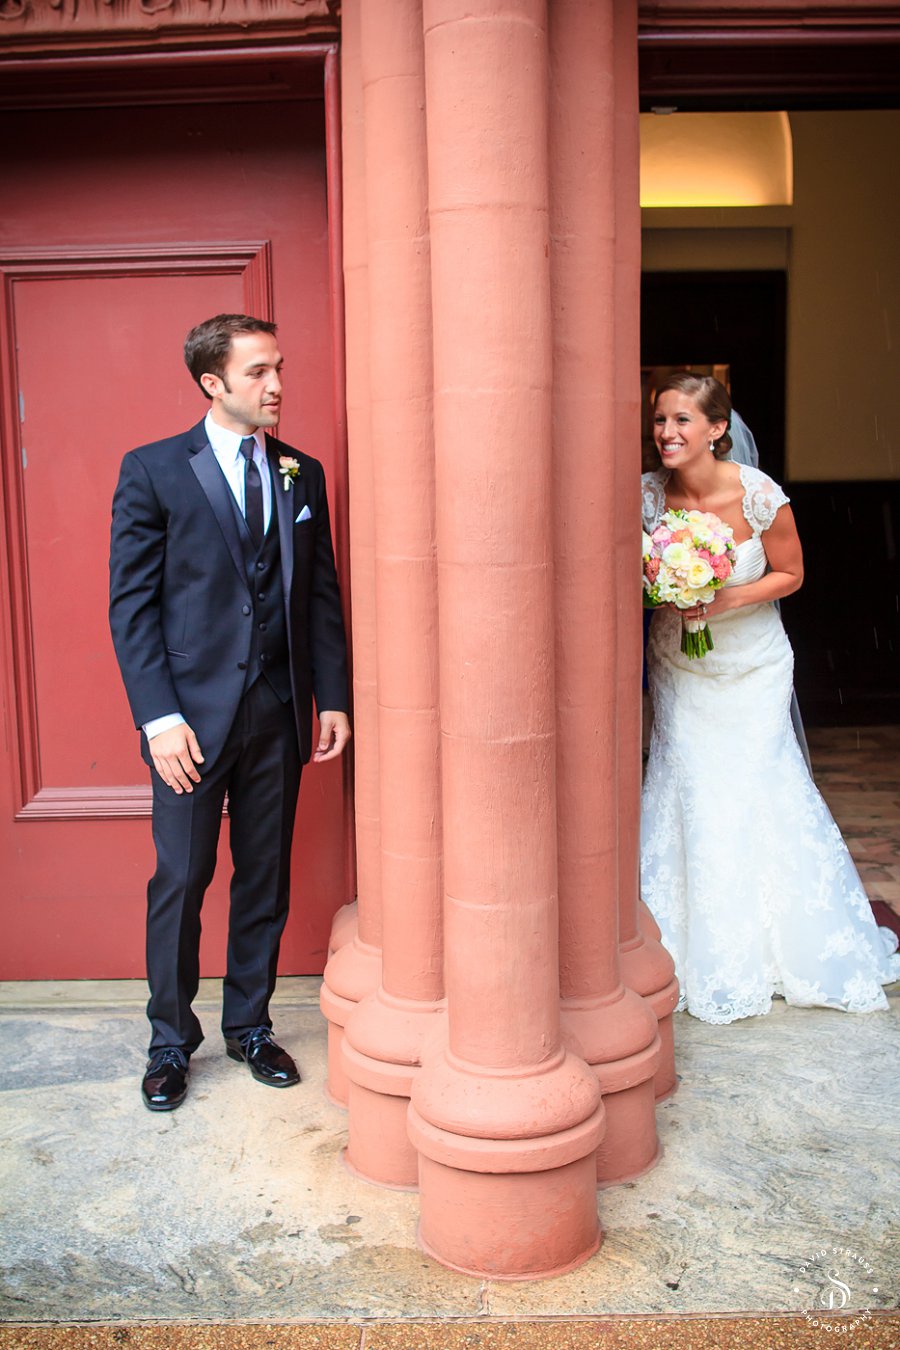 Atlanta Wedding Photography - Charleston Photographer David Strauss - Claire and Kyle - 17